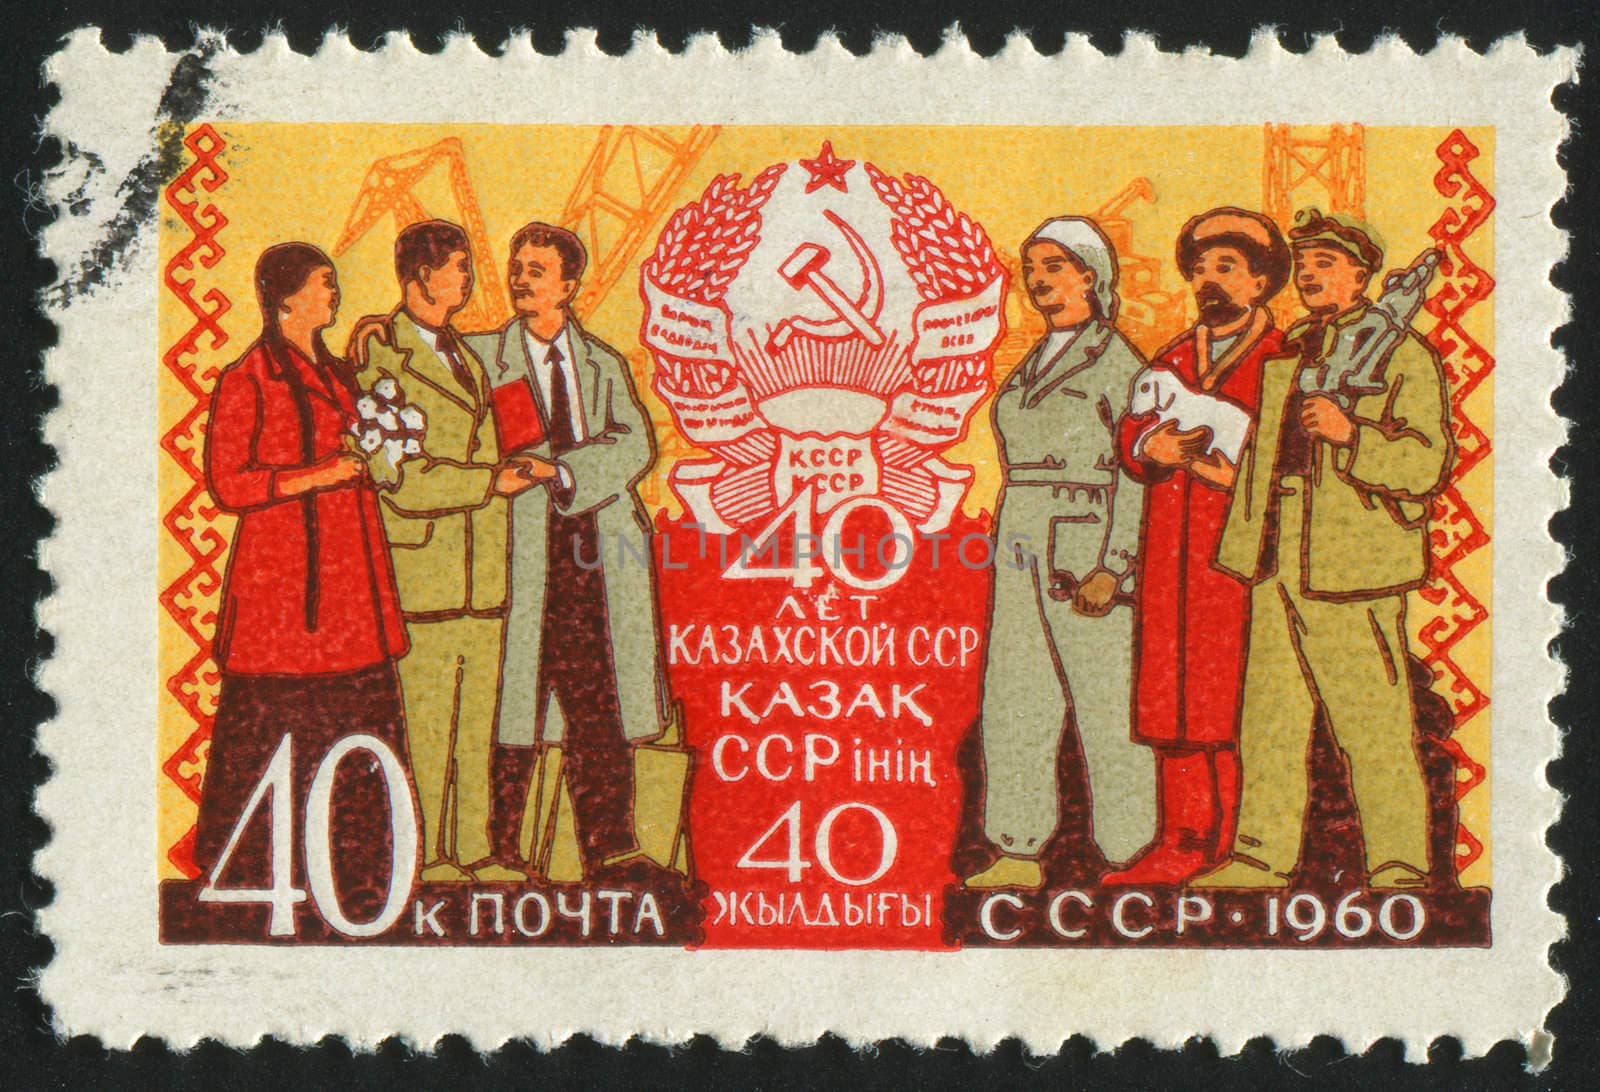 RUSSIA - CIRCA 1960: stamp printed by Russia, shows Farmer, Worker, Scientist, circa 1960.